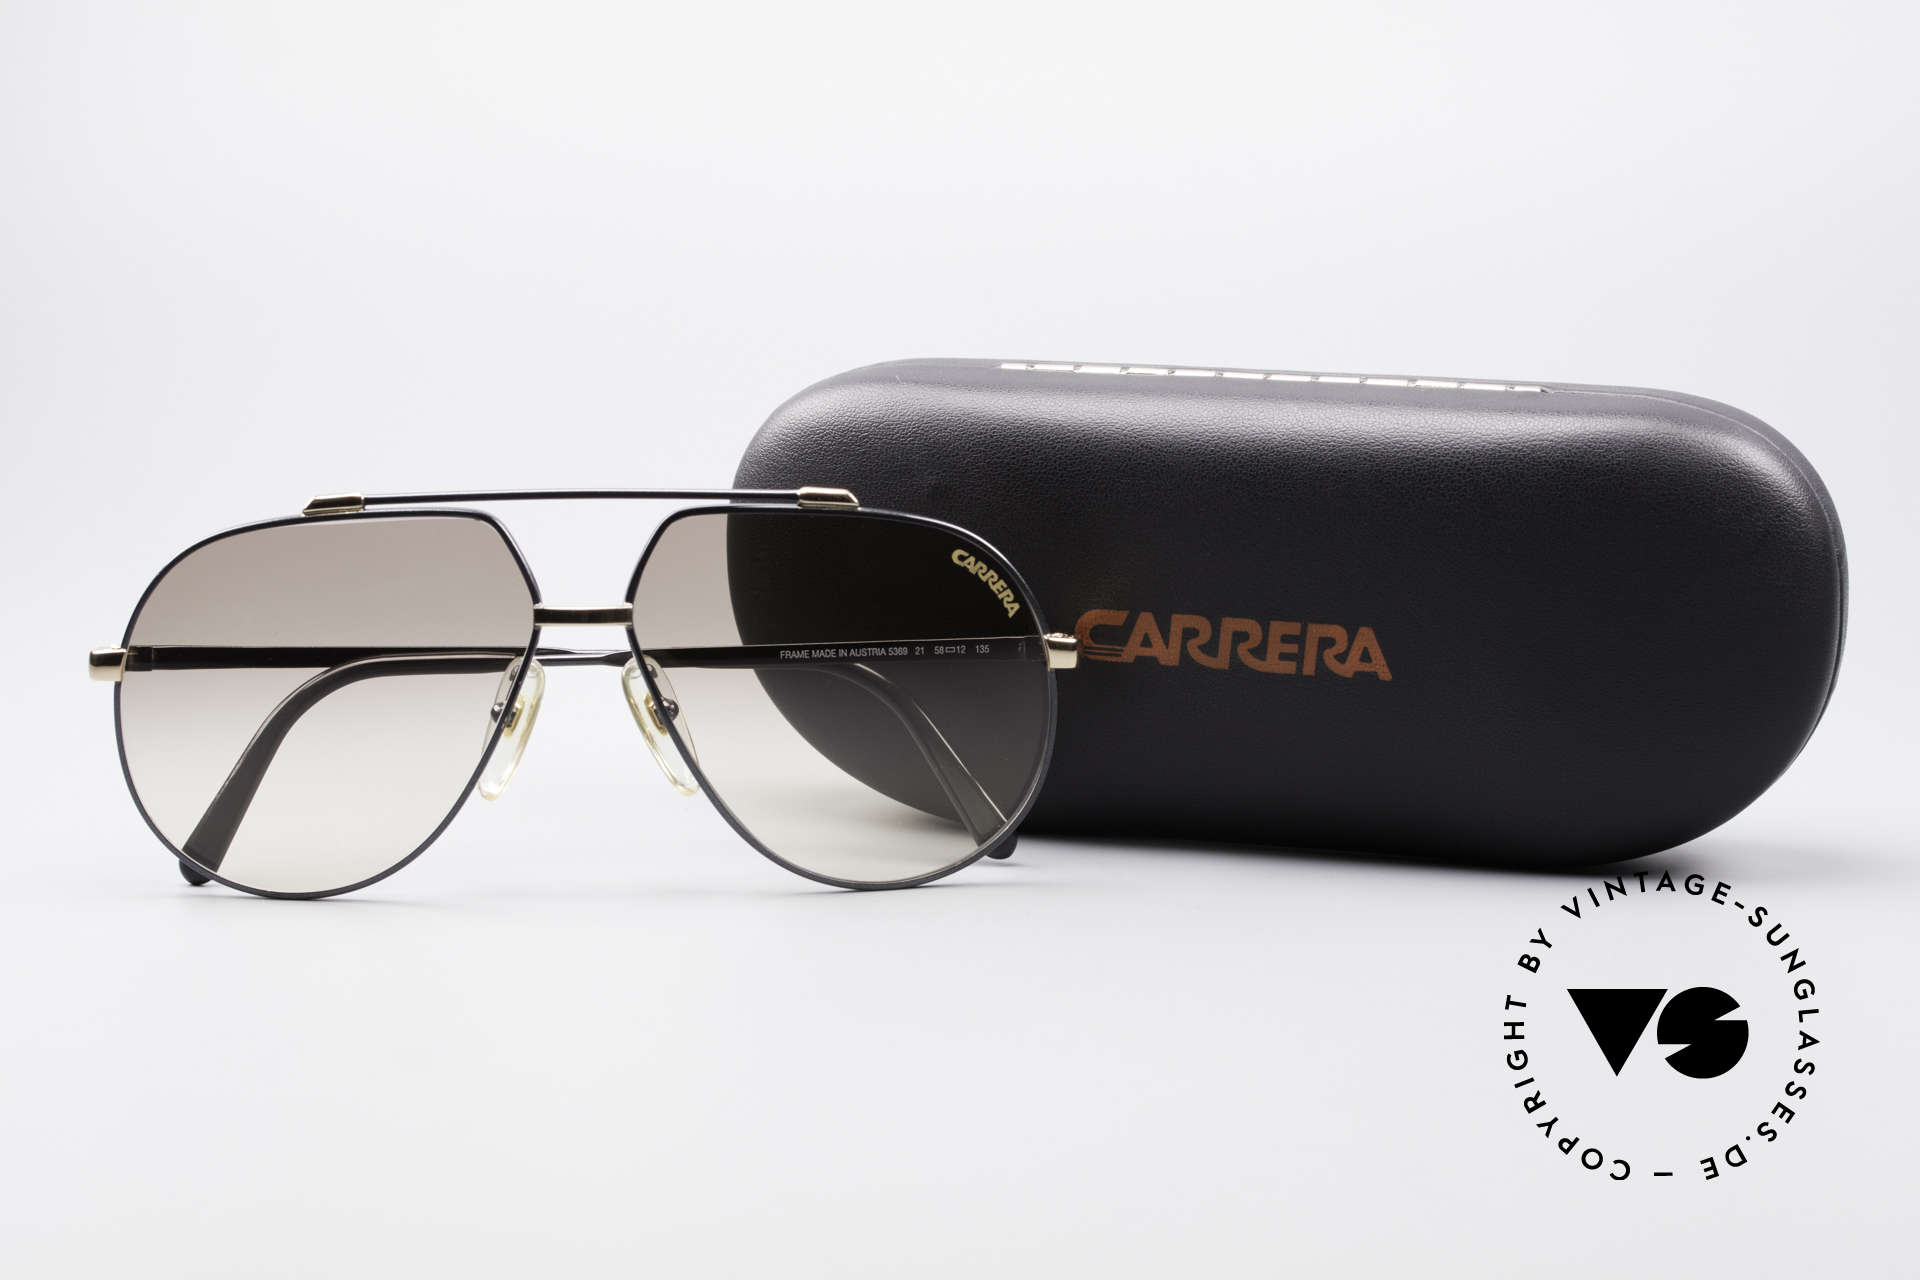 Carrera 5369 90's Men's Sunglasses